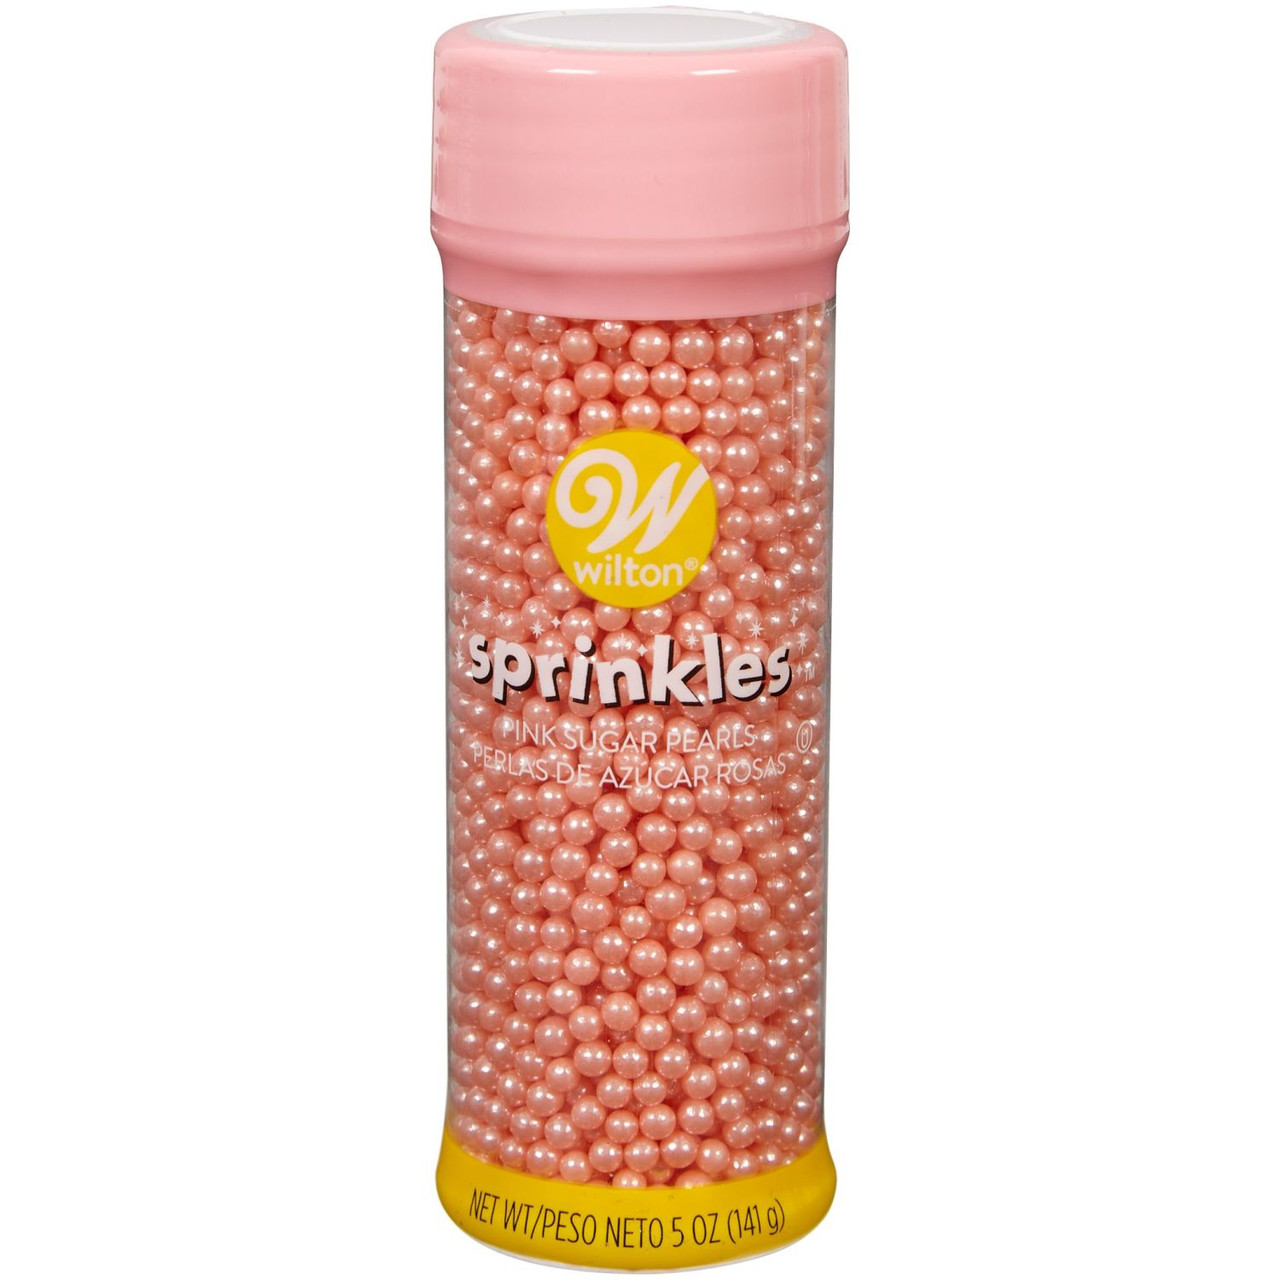 5MM Pink Edible Pearls